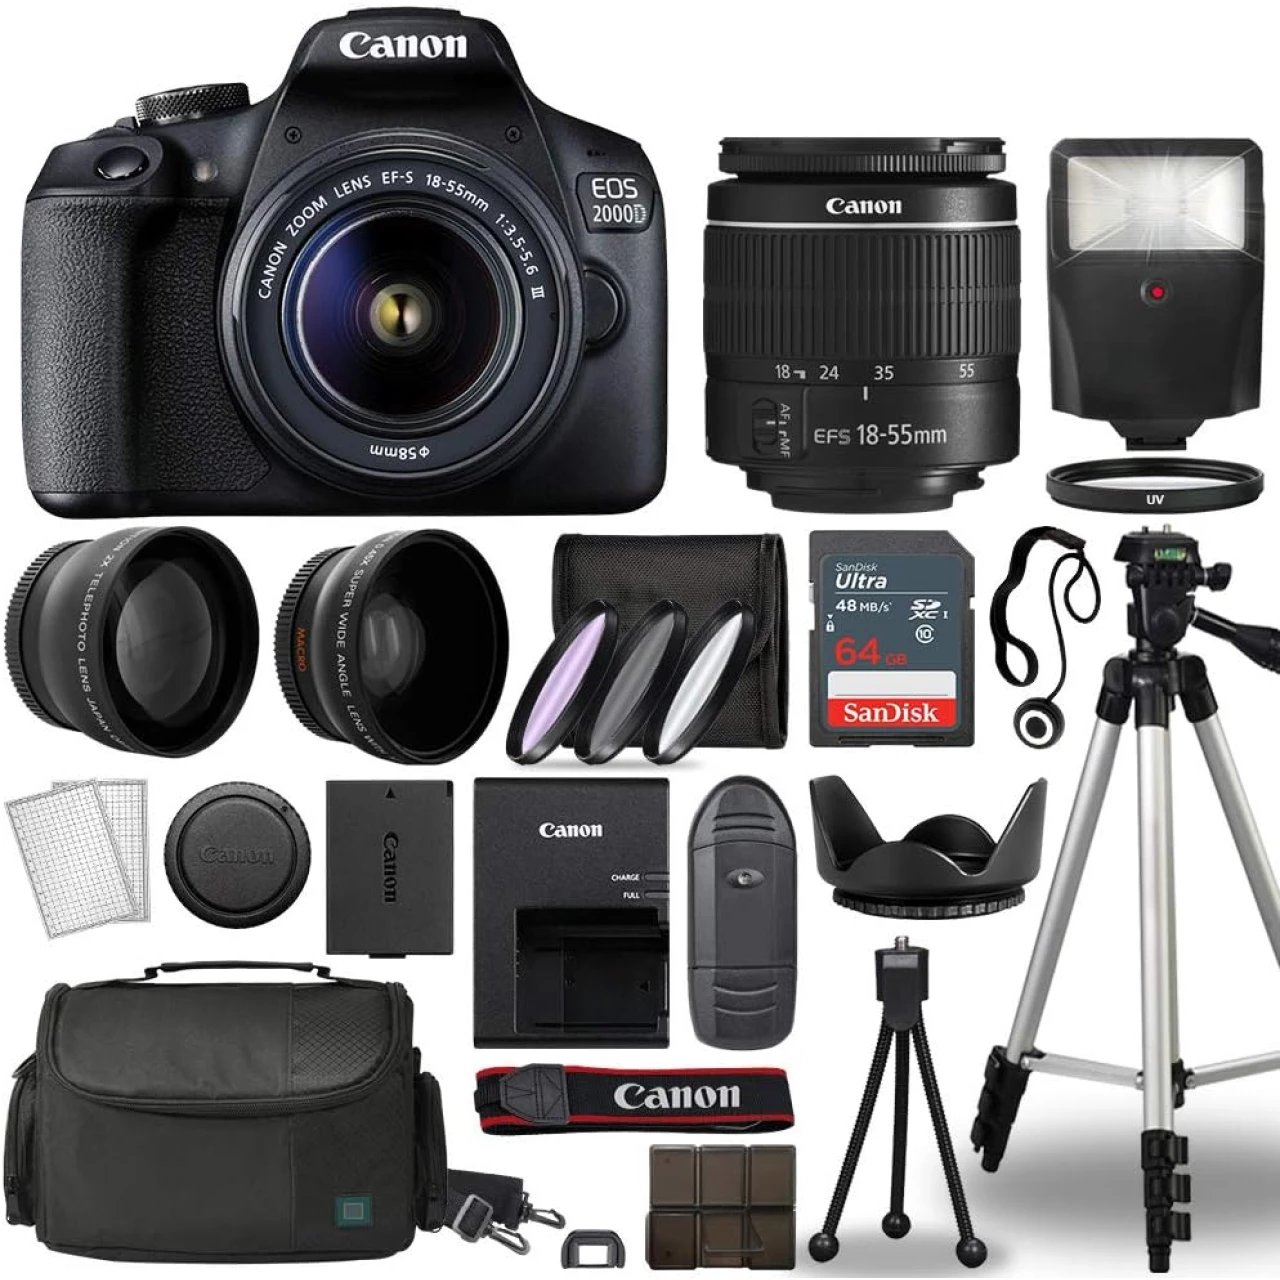 Canon Cameras EOS 2000D / Rebel T7 Digital SLR Camera Body w/Canon EF-S 18-55mm f/3.5-5.6 Lens 3 Lens DSLR Kit Bundled with Complete Accessory Bundle+ 64GB+ Flash+ More - International Model (Renewed)